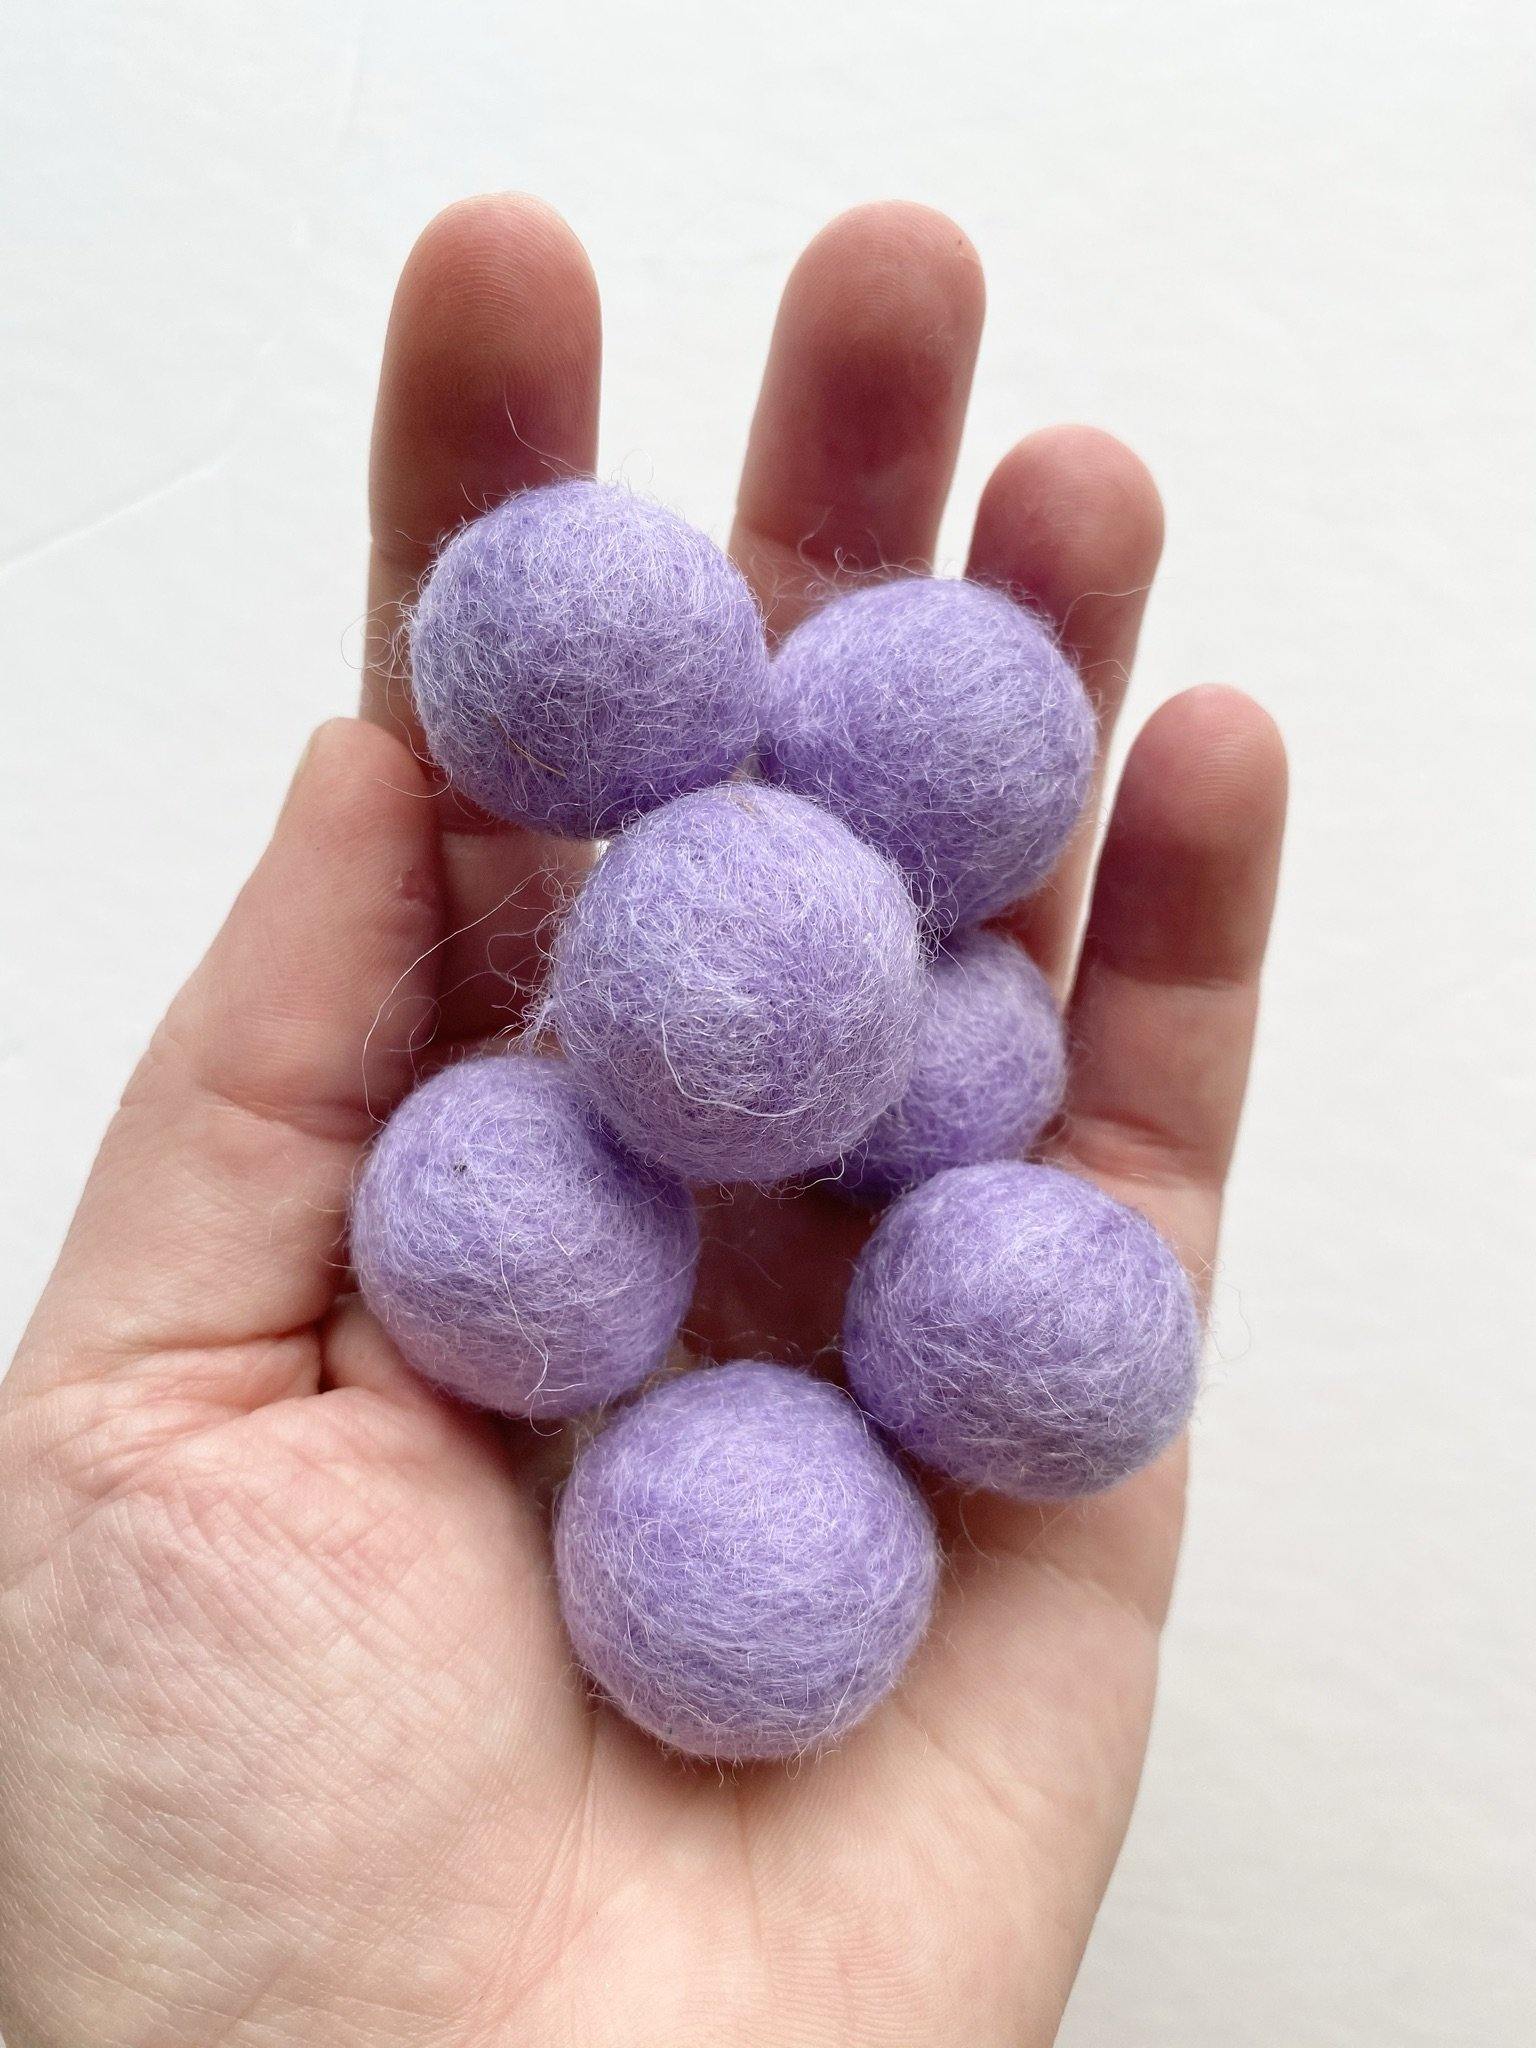 Purples & Steel Grey - 2 cm Felt Pom Pom Balls - Wool Jamboree